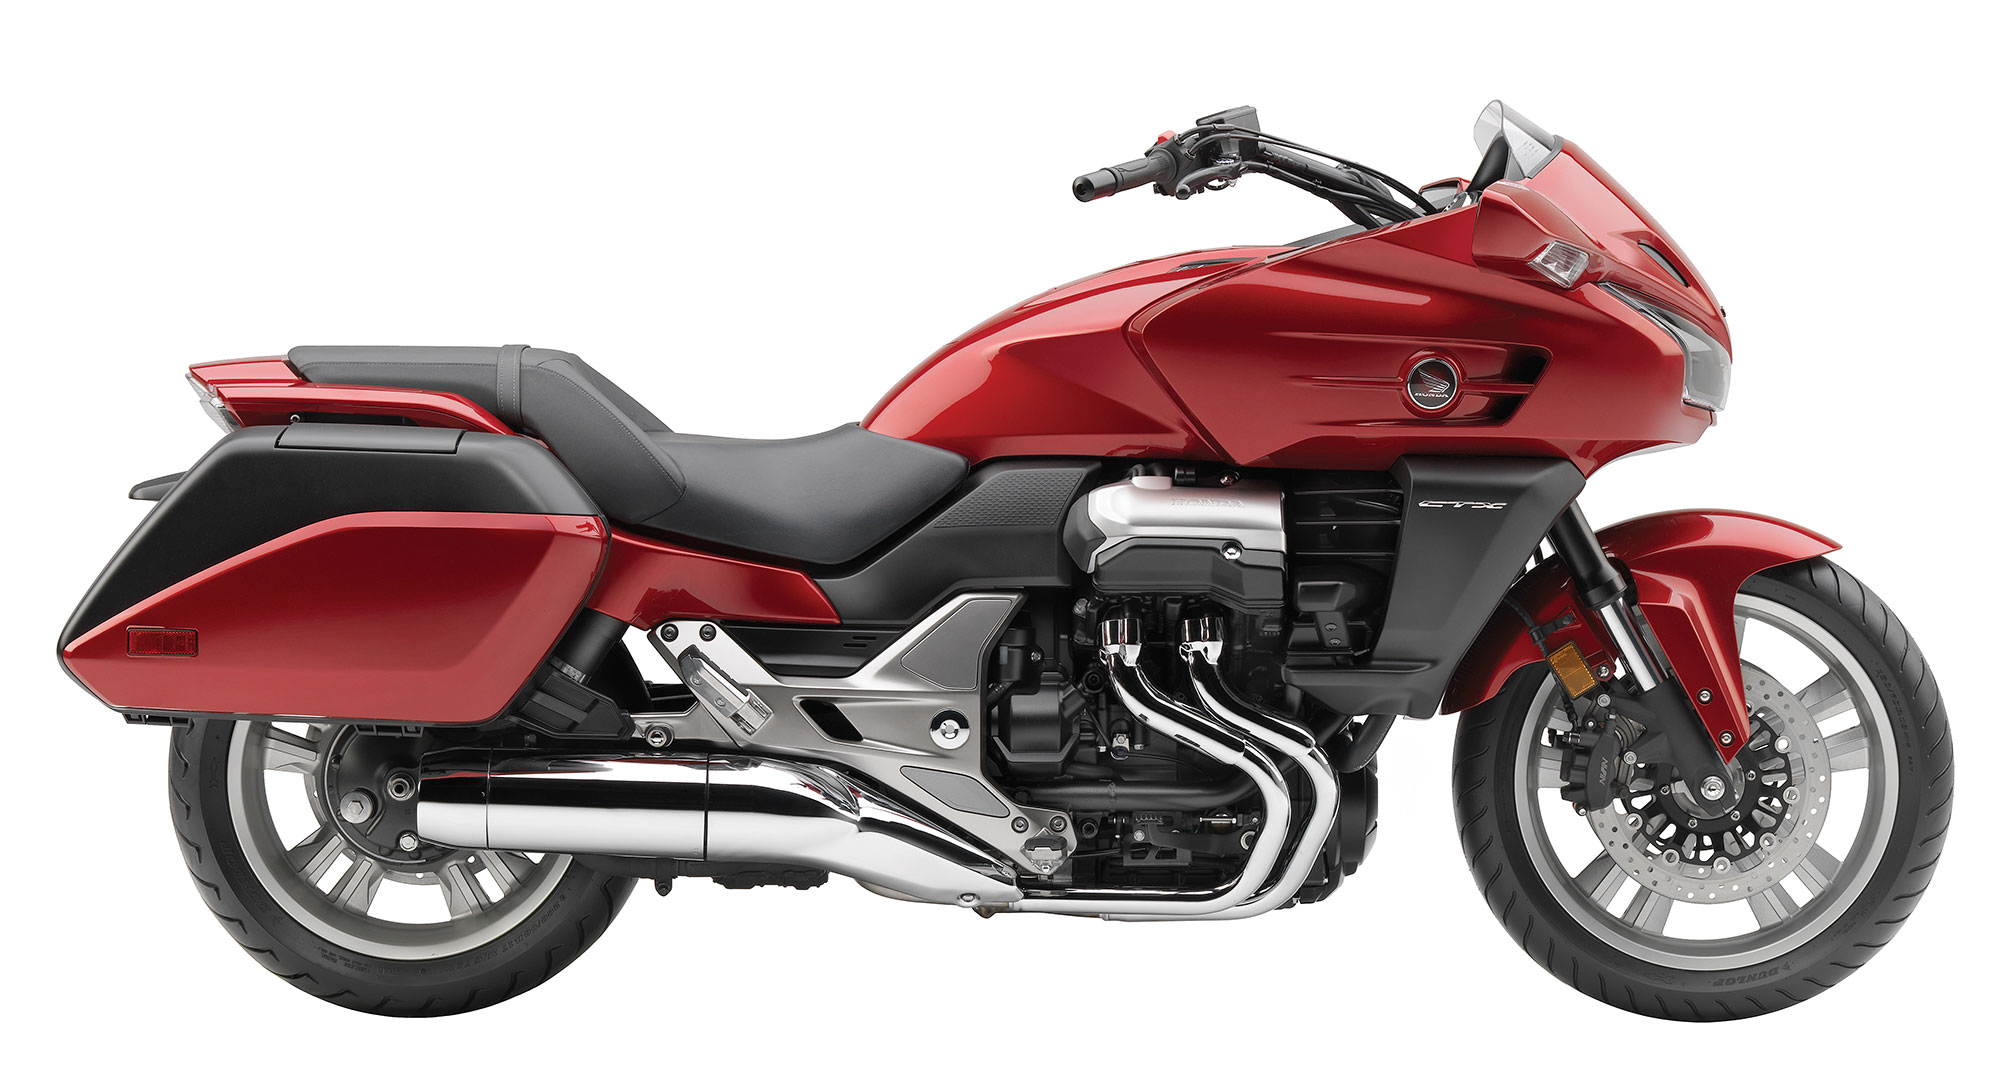 2014 Honda CTX1300 Review